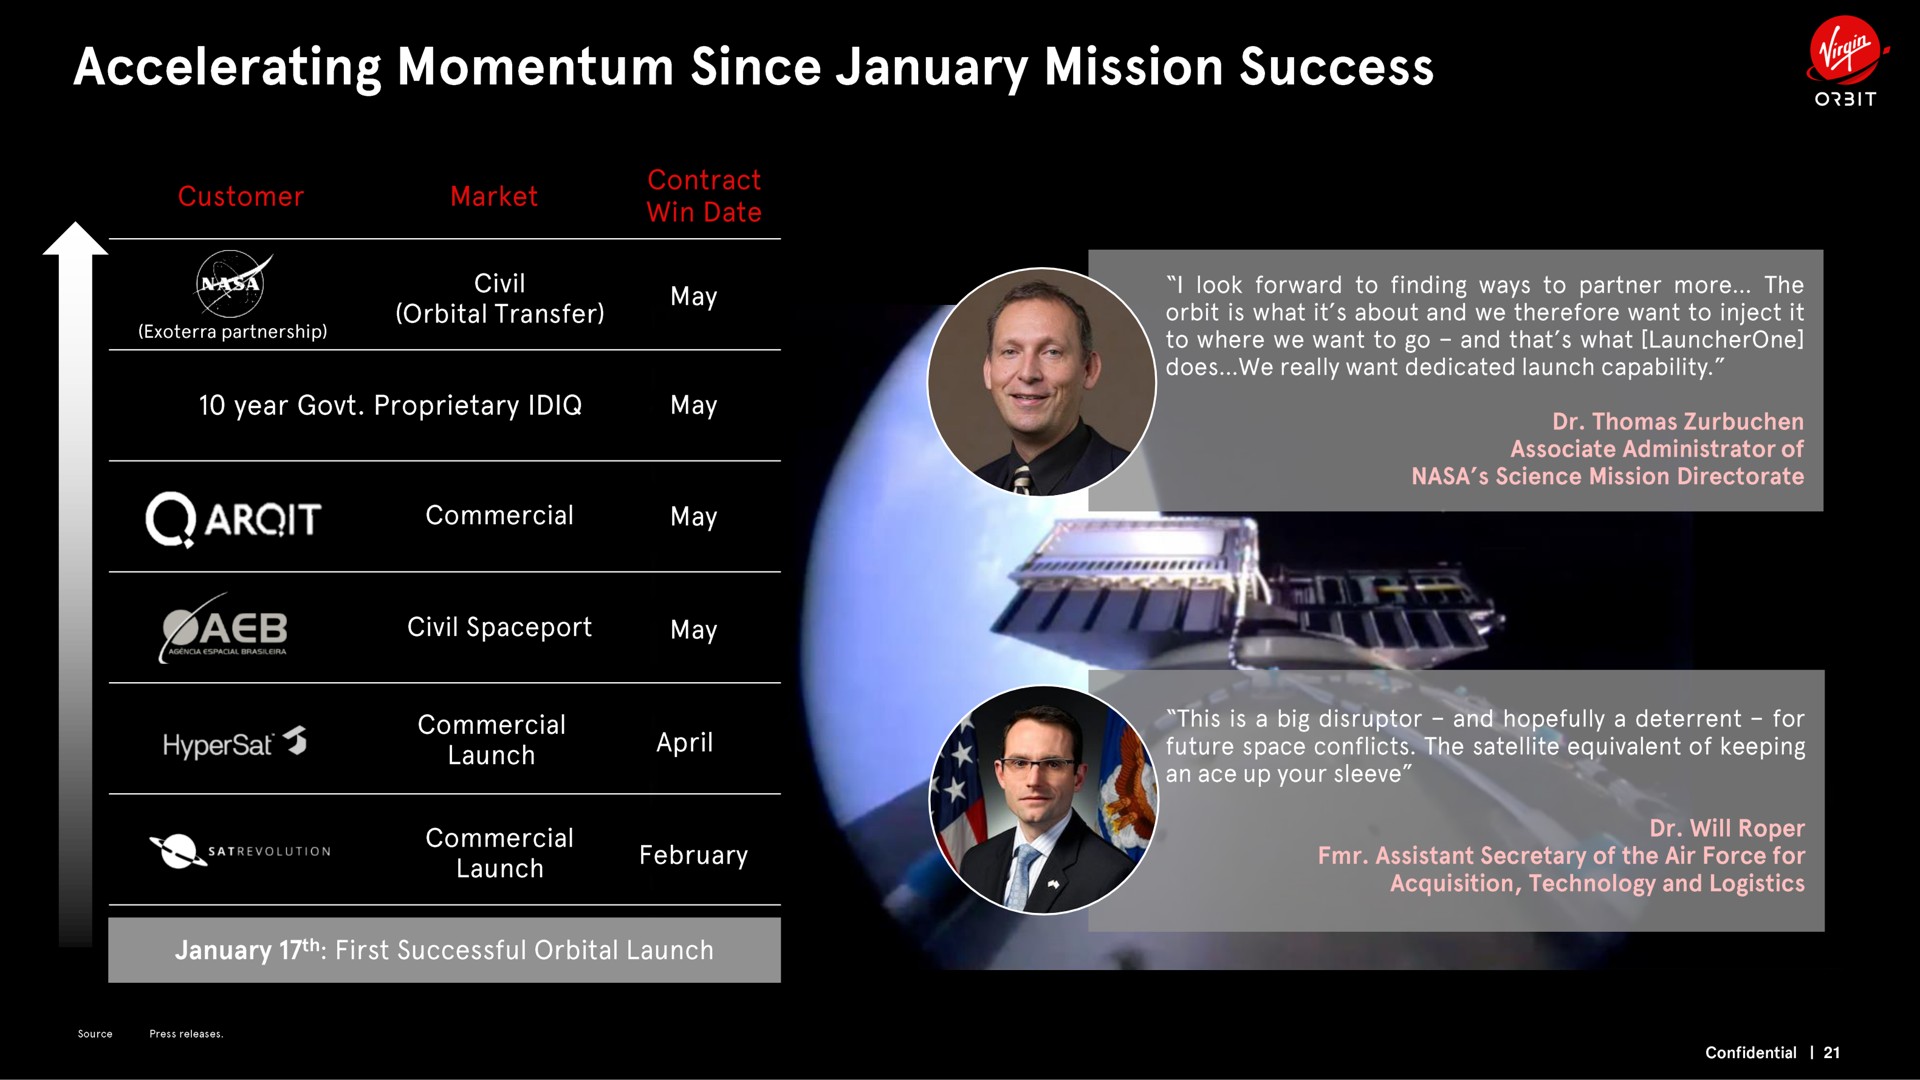 accelerating momentum since mission success | Virgin Orbit